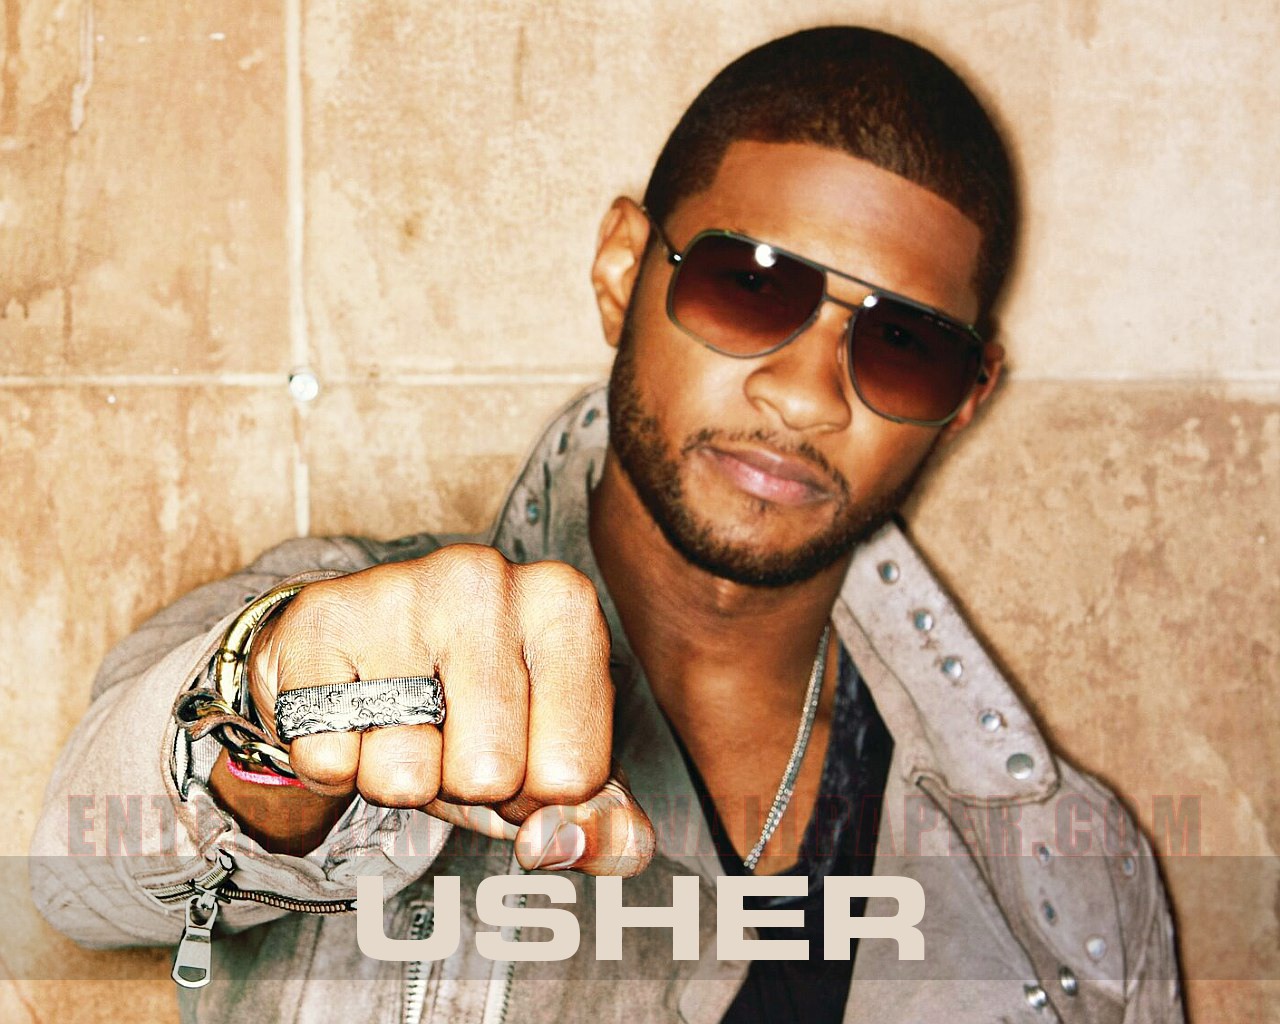 Usher Wallpaper - Original size, download now.